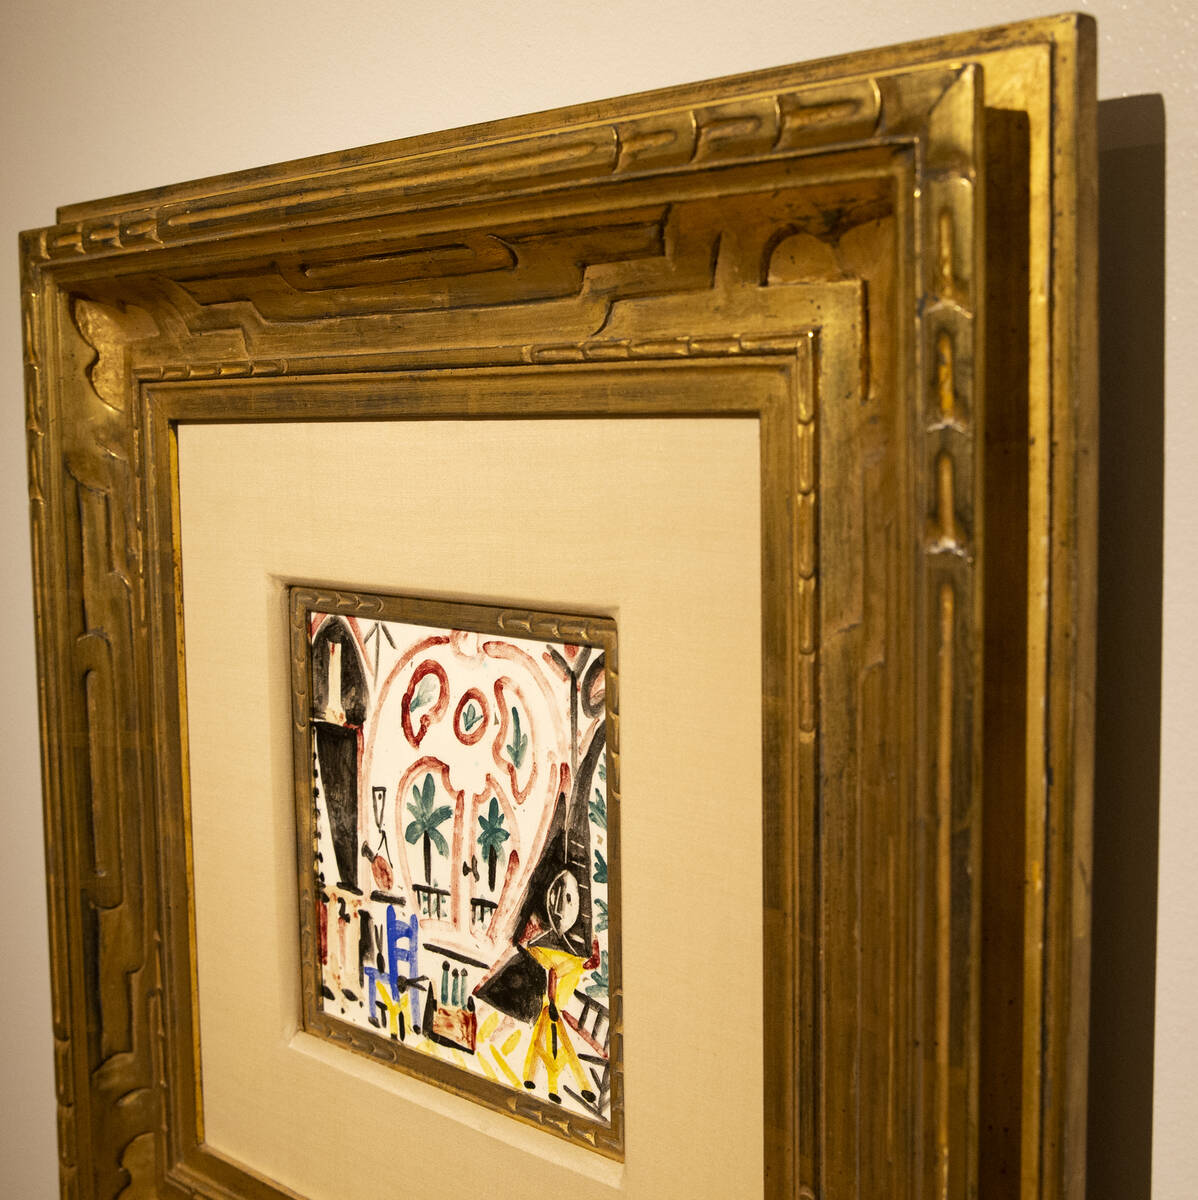 Pablo Picasso's "La fenetre de l'atelier la Californie" is on display at the Bellagio Gallery o ...